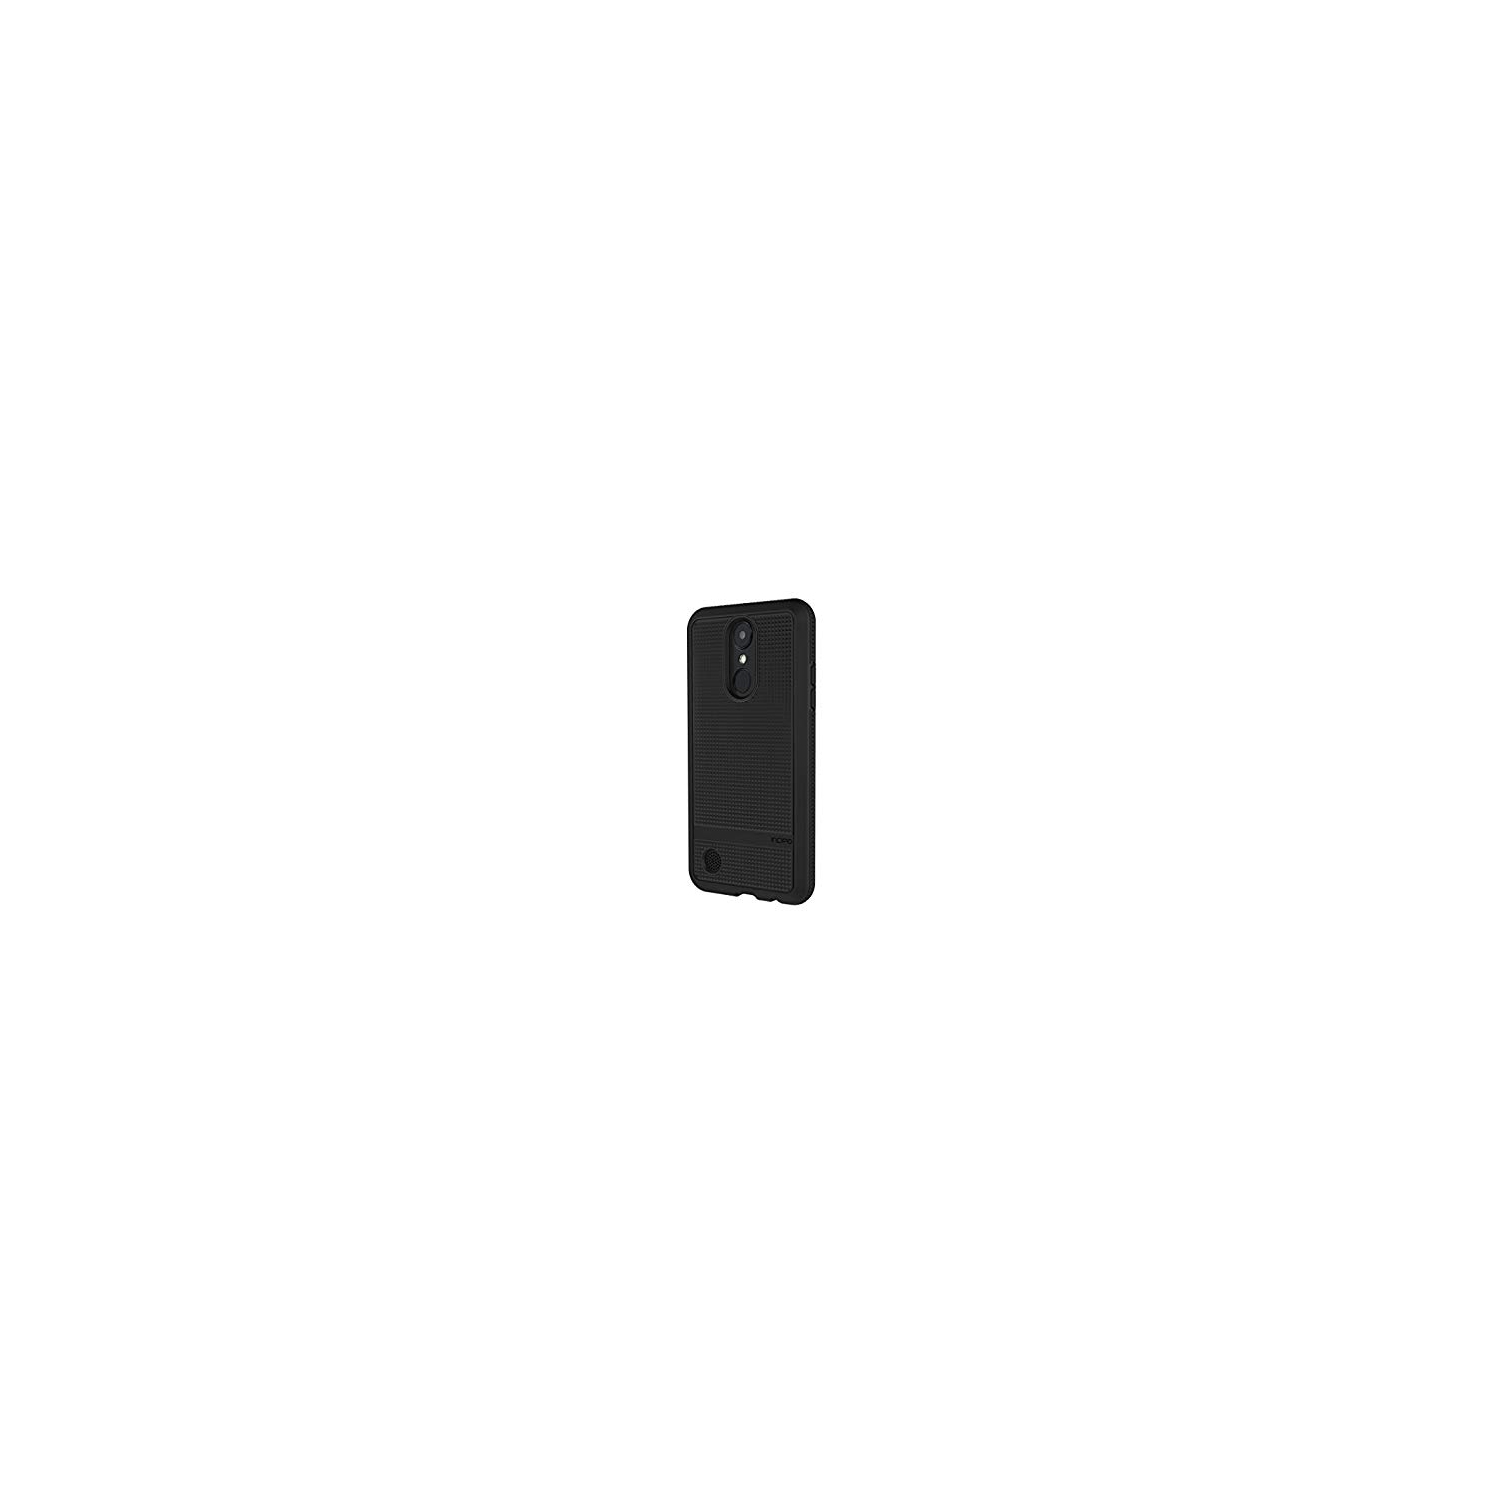 Incipio Technologies LG Phoenix 3 Fortune Risio 2 Rebel 2 LTE Ngp Advanced Case - Black